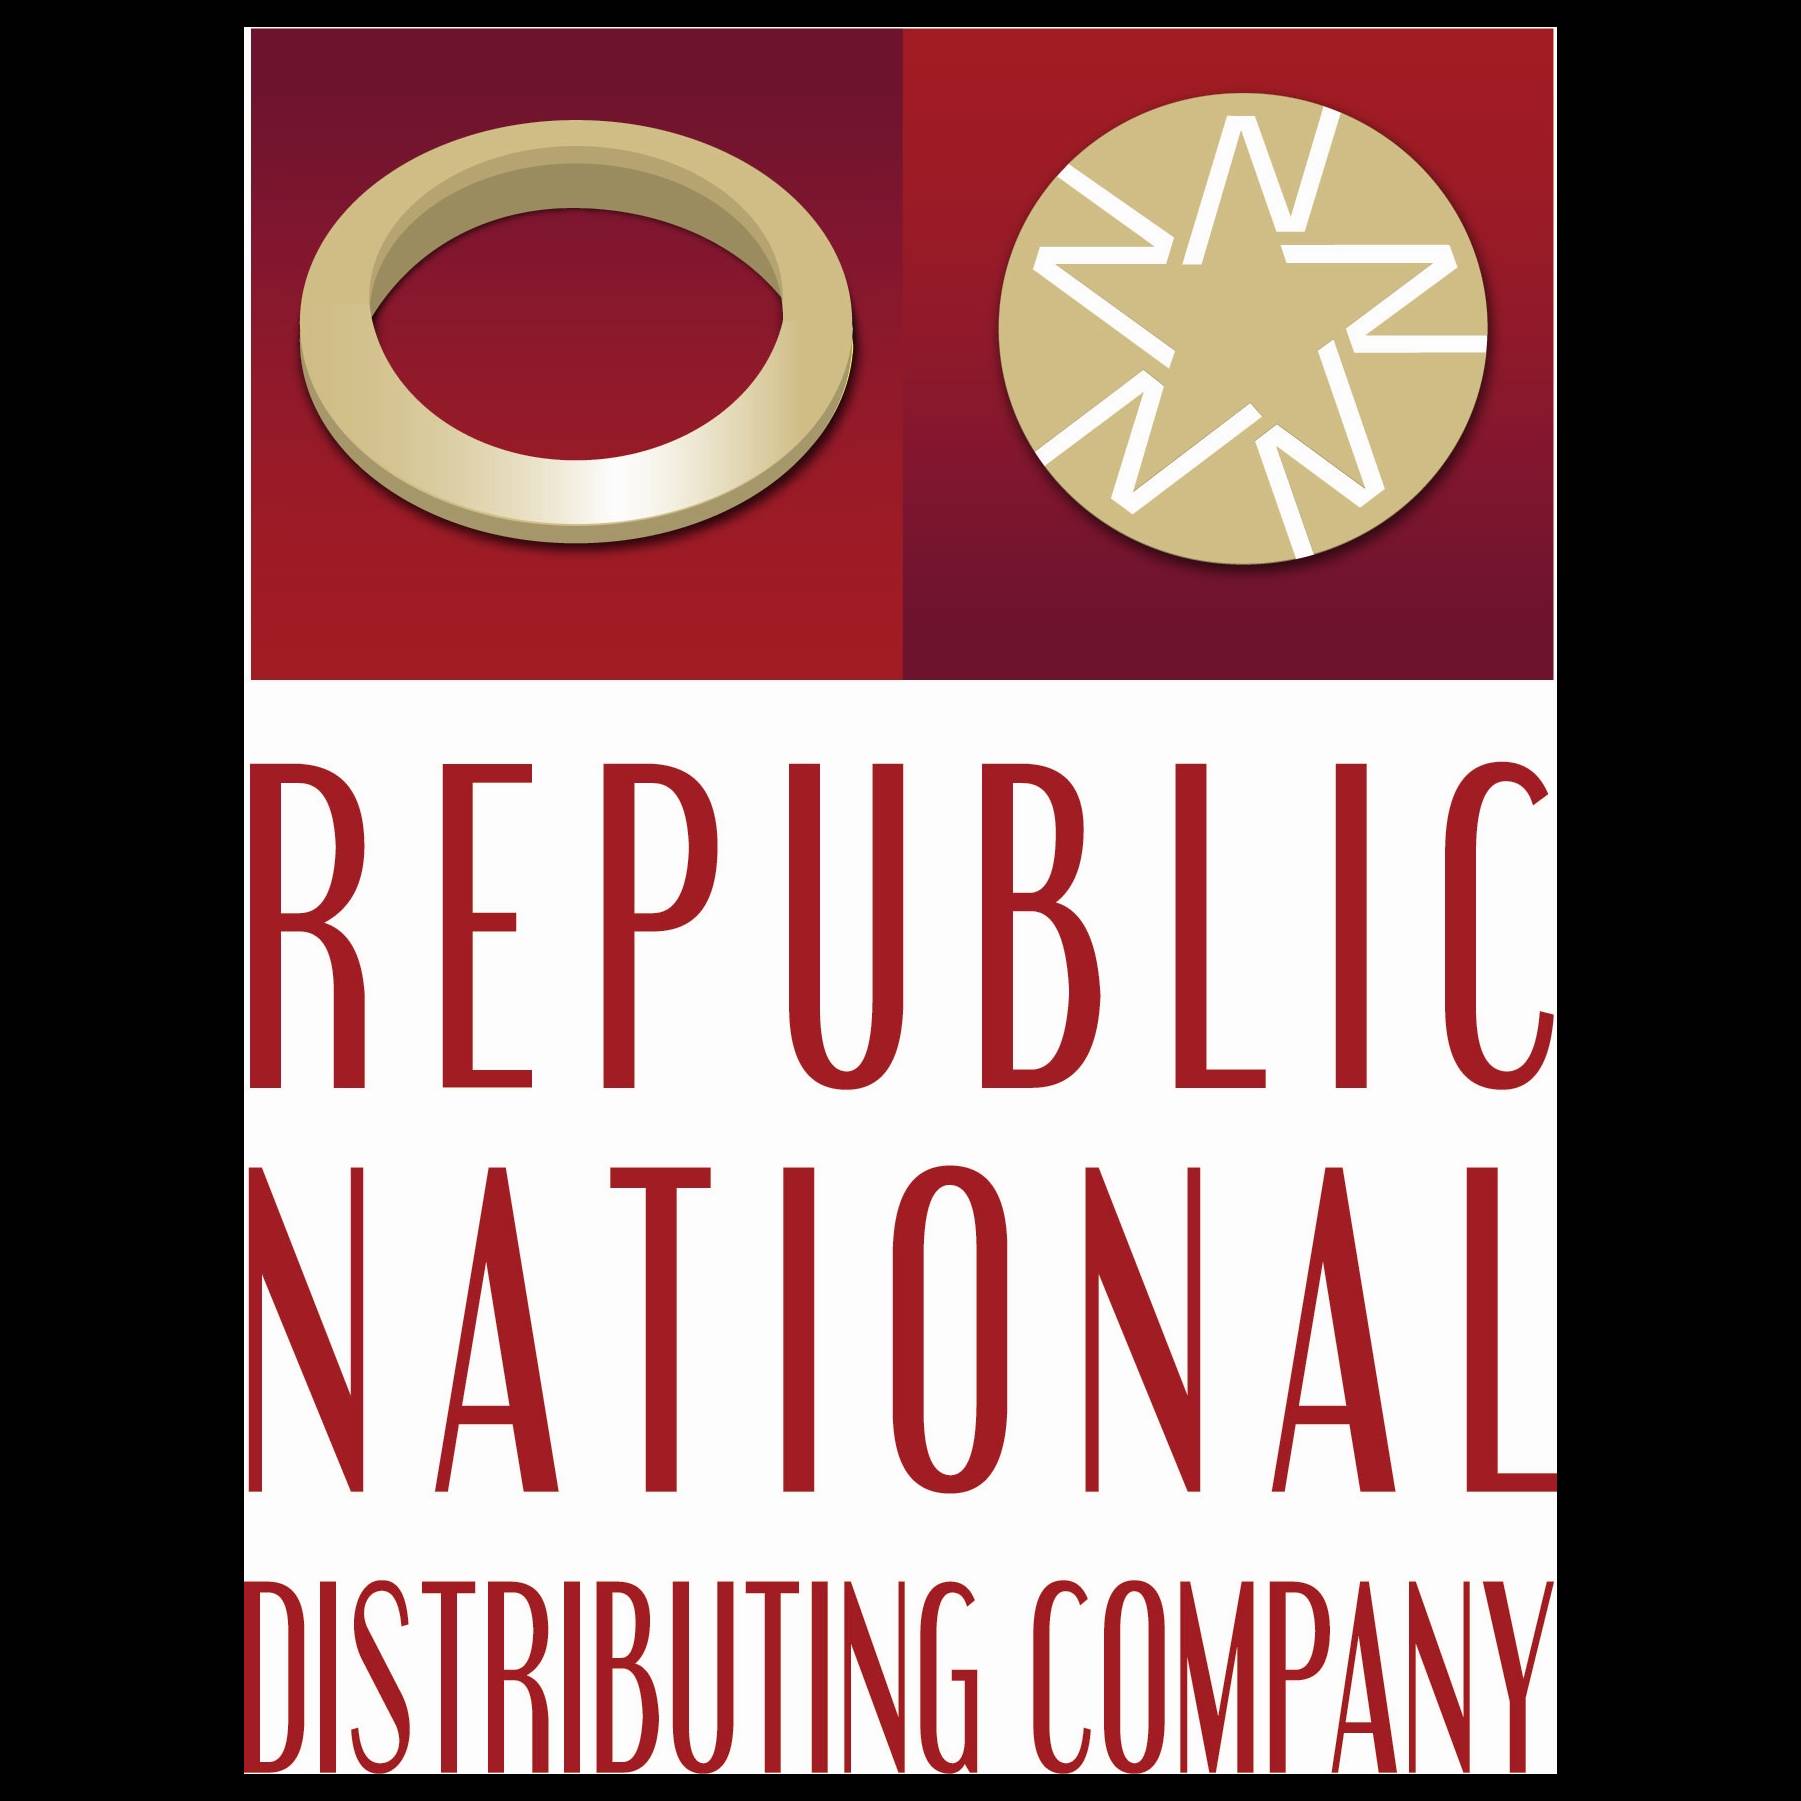 Republic National Distributing Company